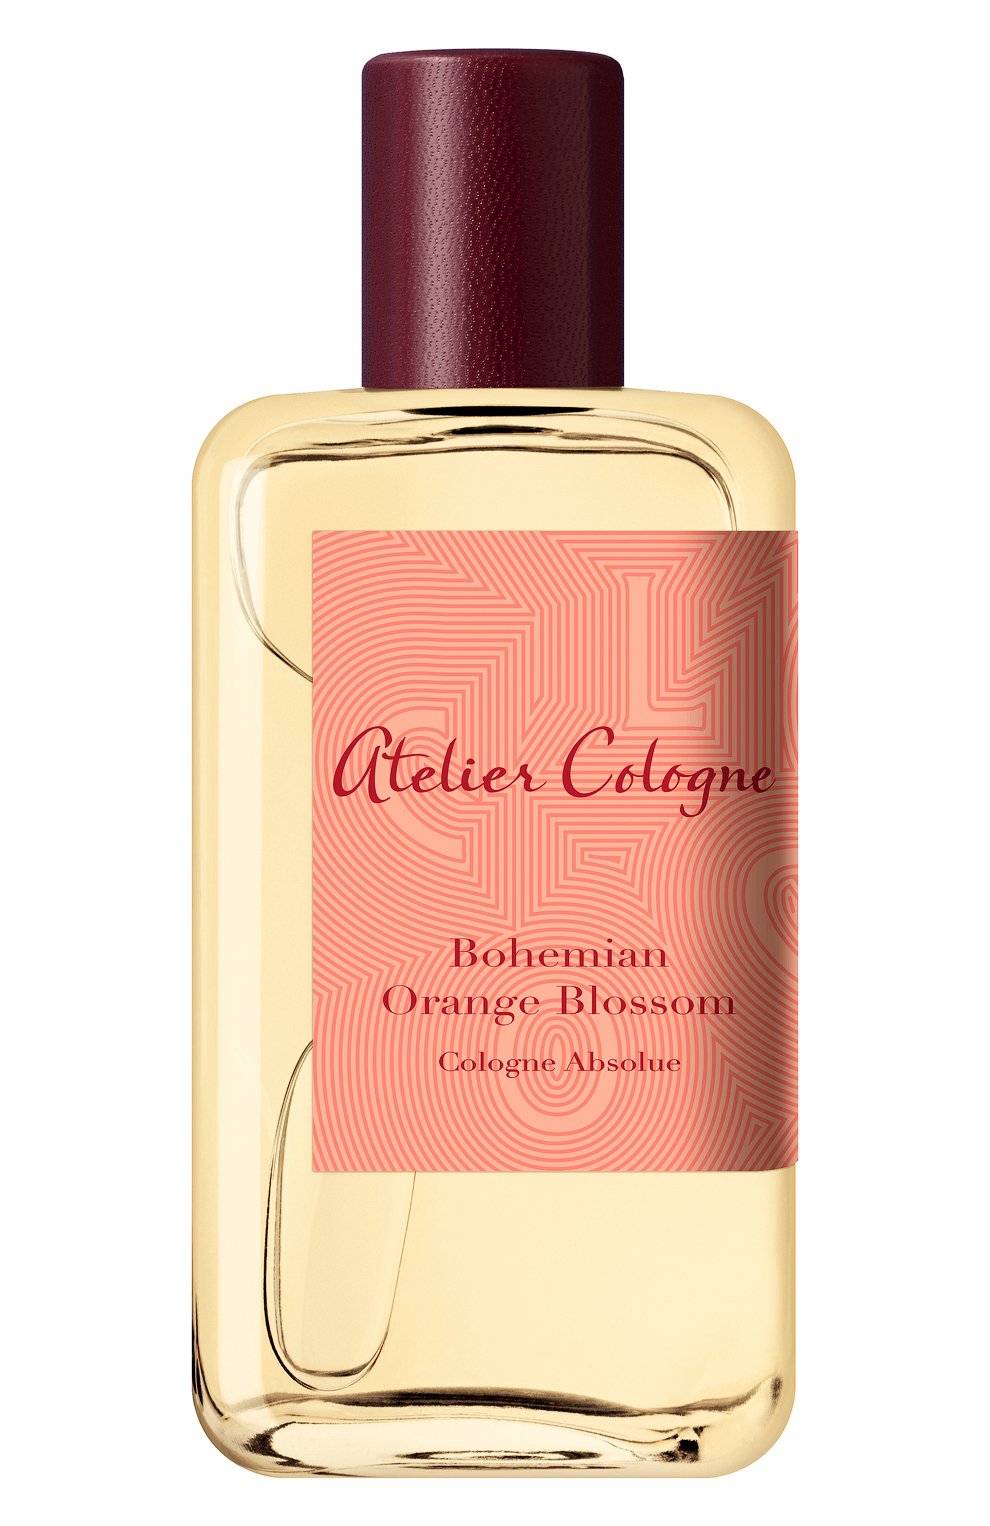 Парфюмерная вода bohemian orange blossom (100ml) ATELIER COLOGNE бесцветного цвета, арт. 3614273473422 | Фото 1 (Обьем косметики: 100ml; Тип продукта - парфюмерия: Парфюмерная вода; Ограничения доставки: flammable)